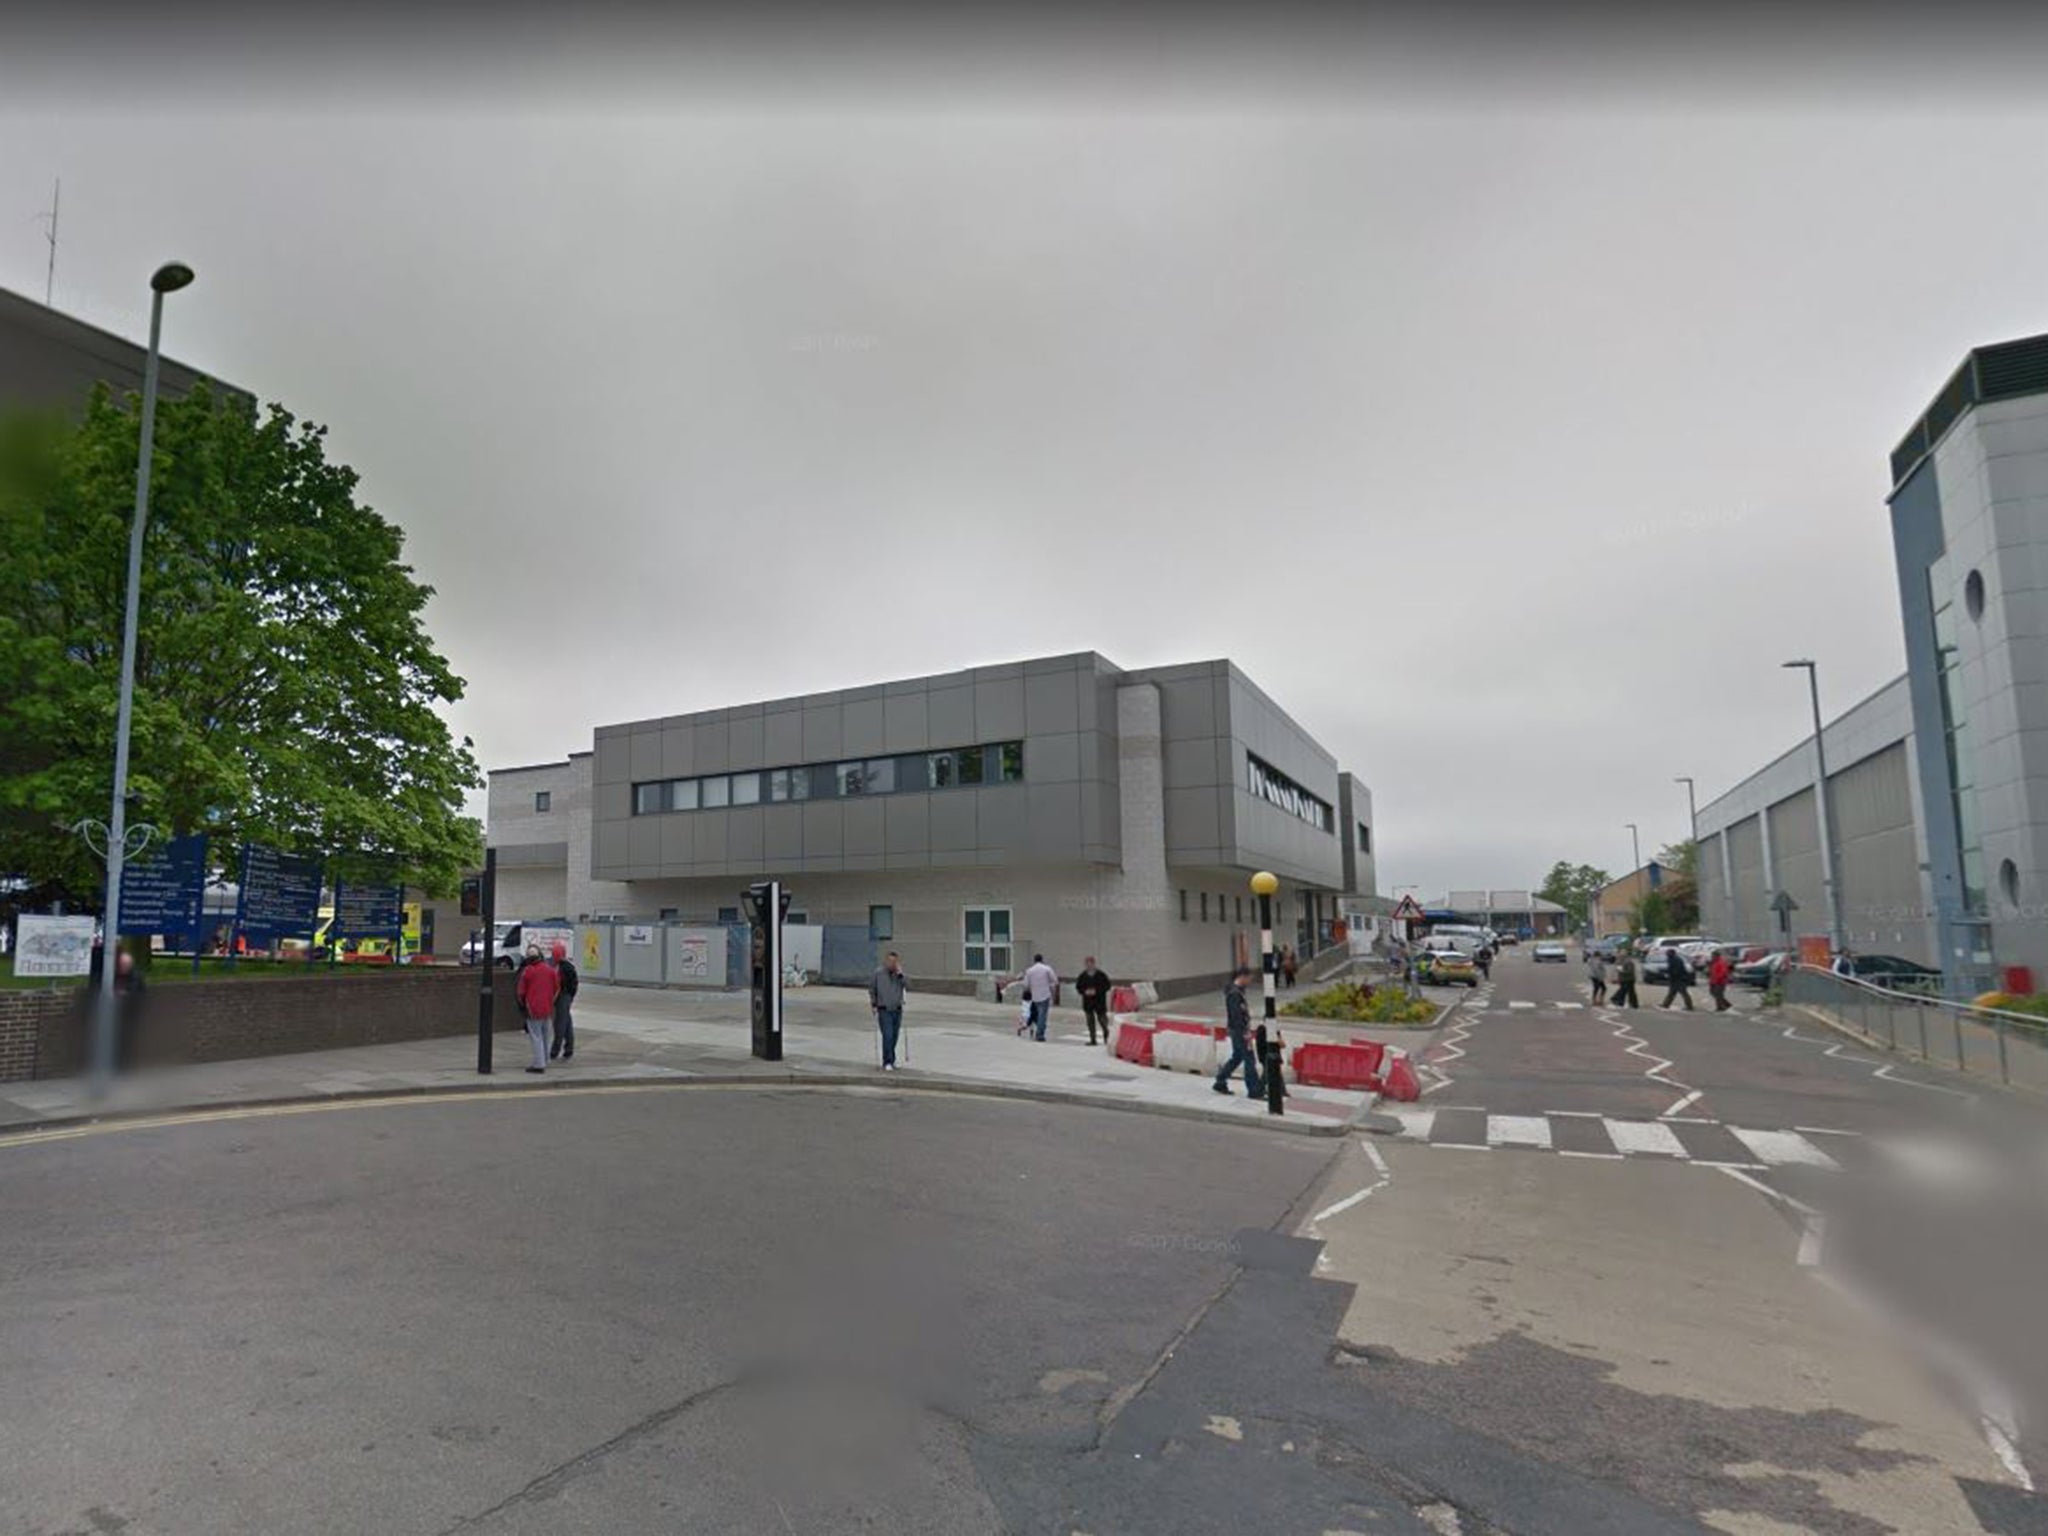 Basildon Hospital's A&E department remains open to the public